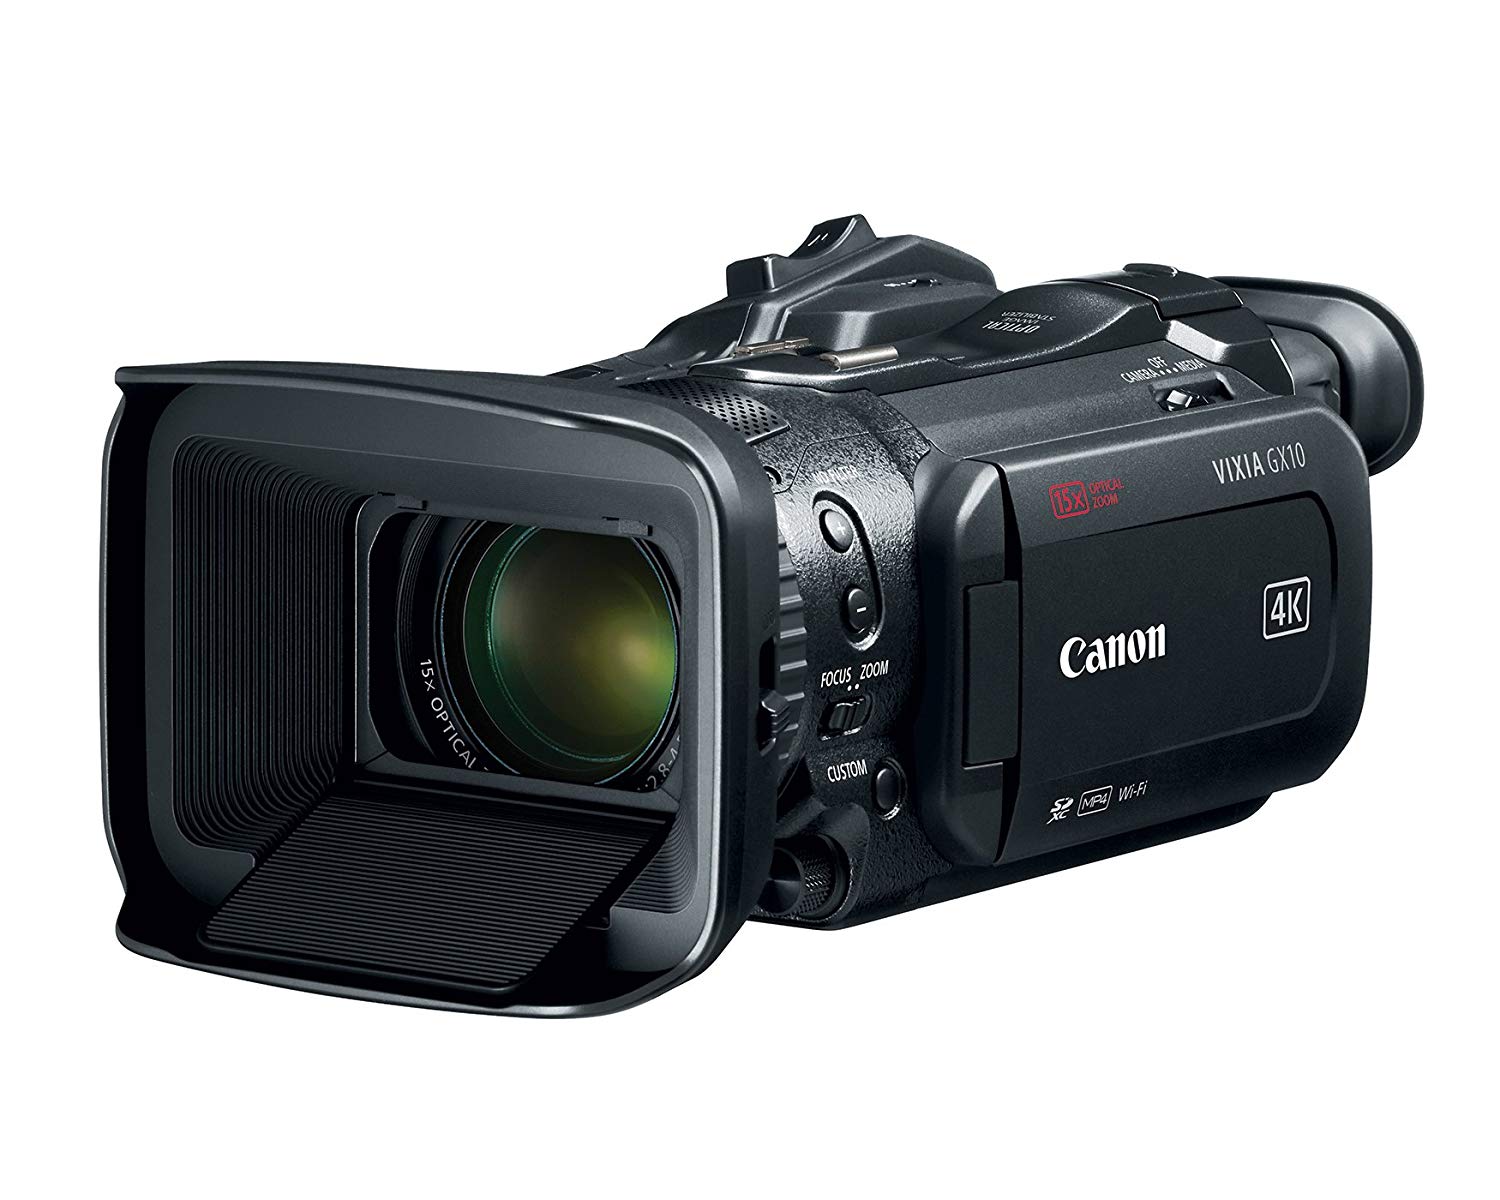 Canon 佳能Vixia GX10 Wi-Fi 4K超高清数字视频摄像机...